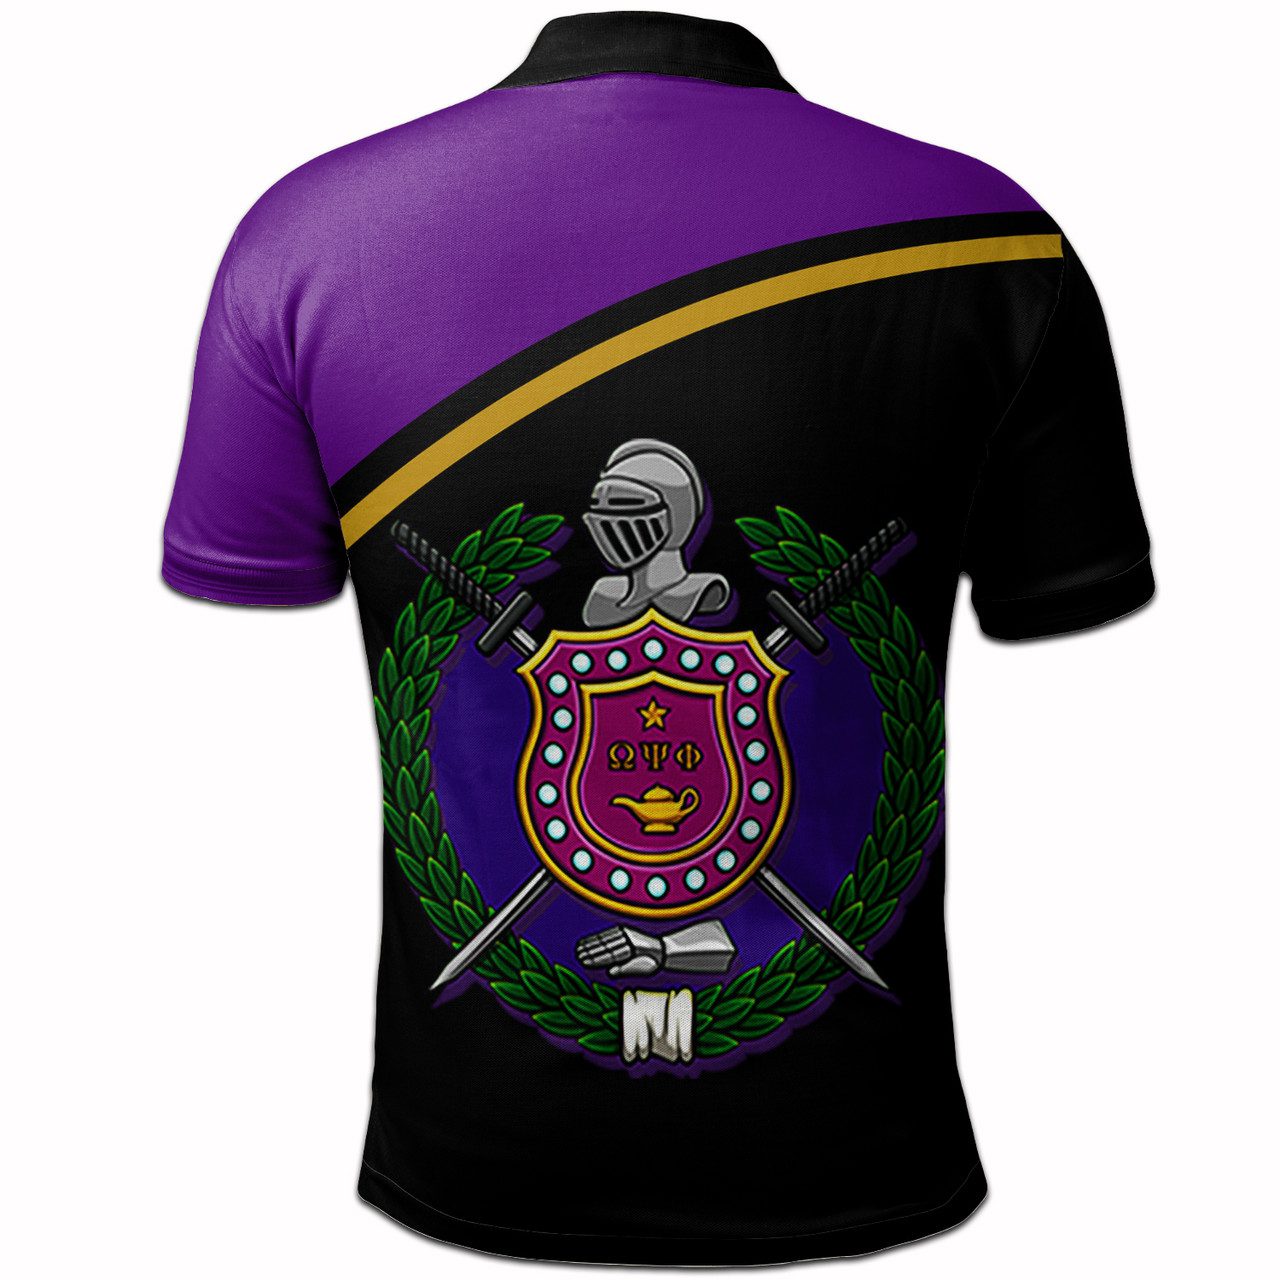 Omega Psi Phi Polo Shirt – Fraternity Curve Version Polo Shirt